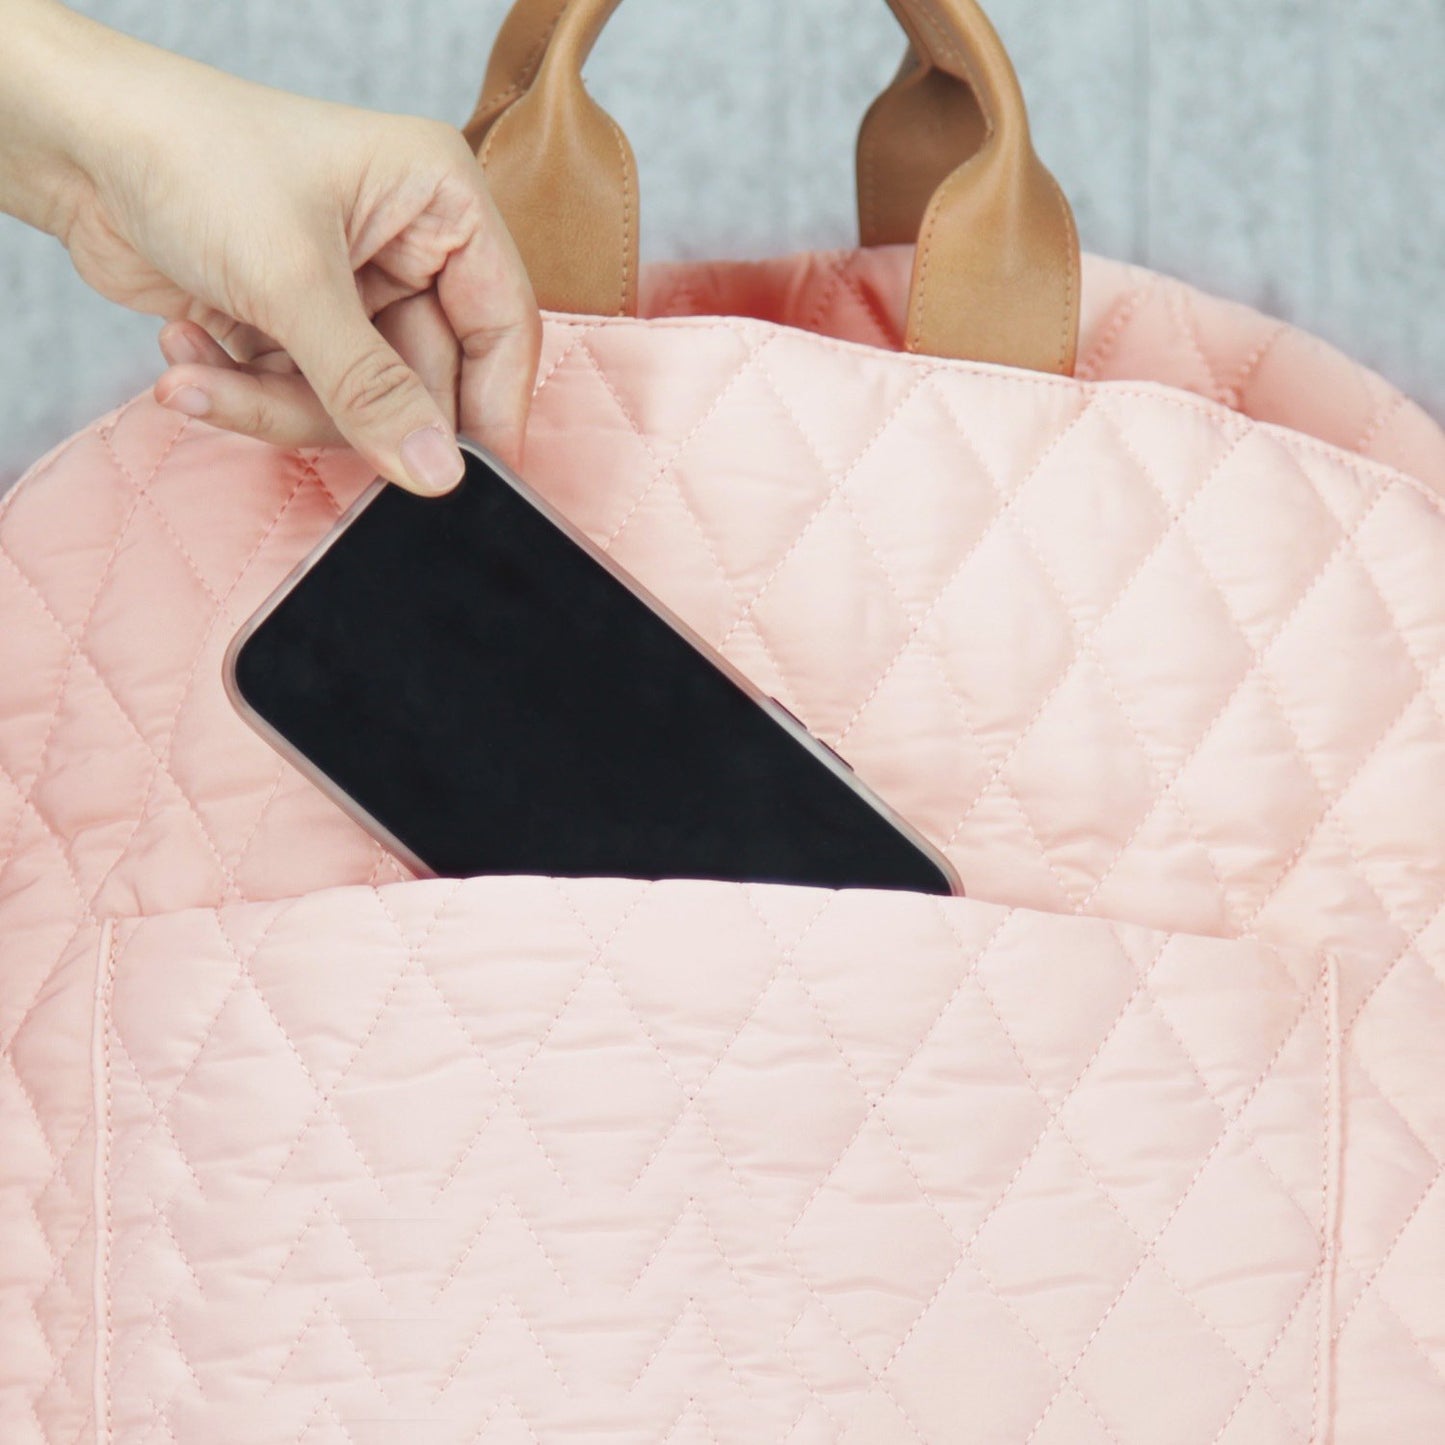 Nylon waterproof pet bag detachable handbag car seat dual-use travel